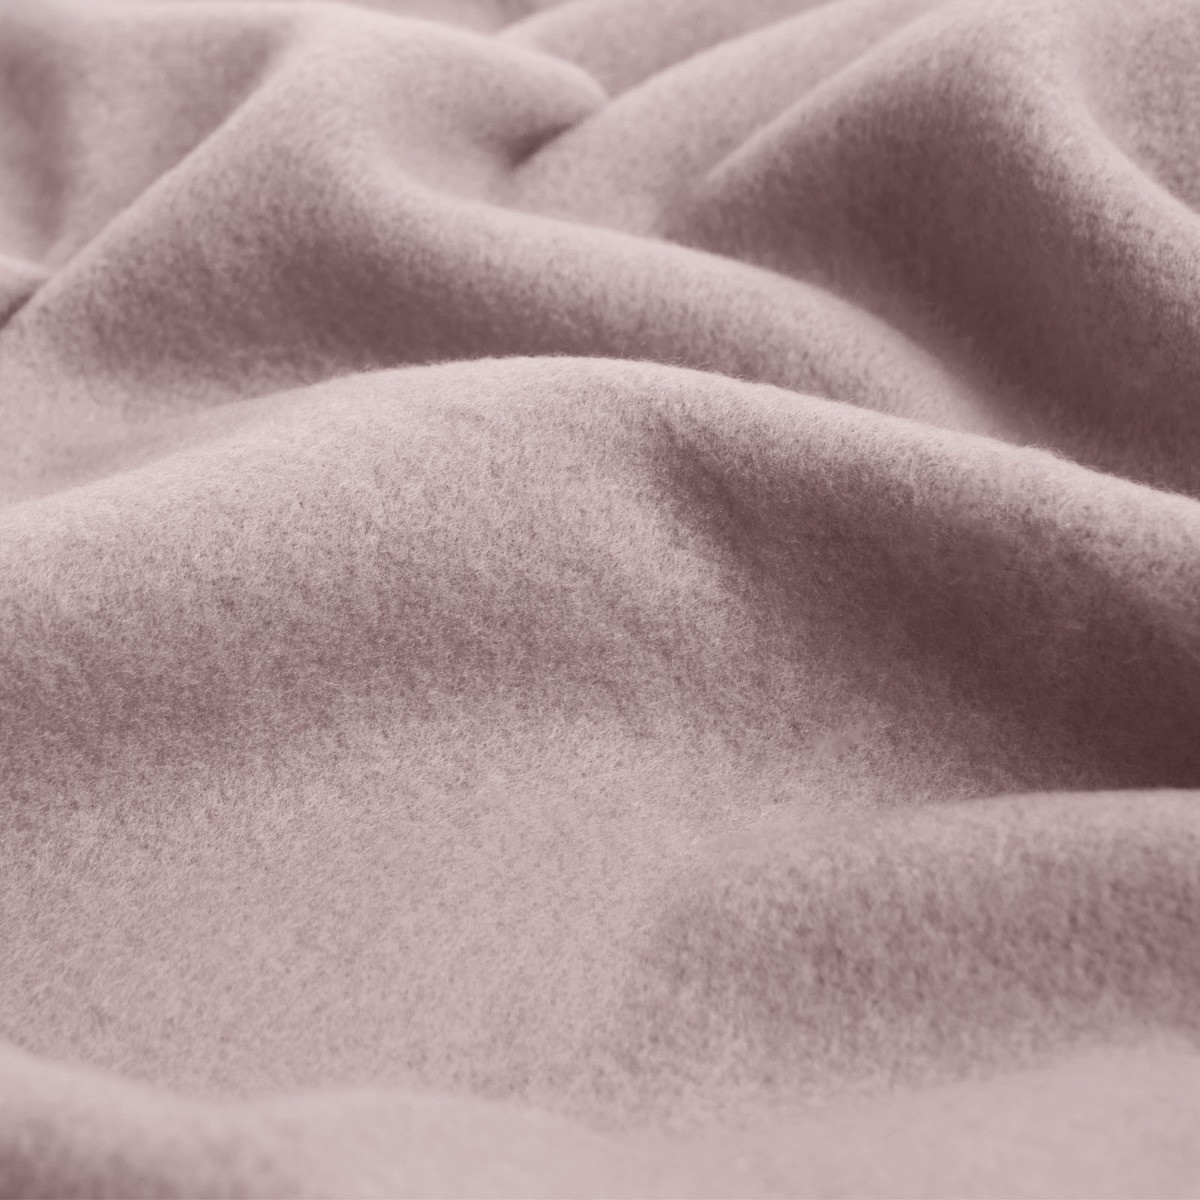 Dreamscene Plain Fleece Throw, Blush Pink - 200 x 240cm>